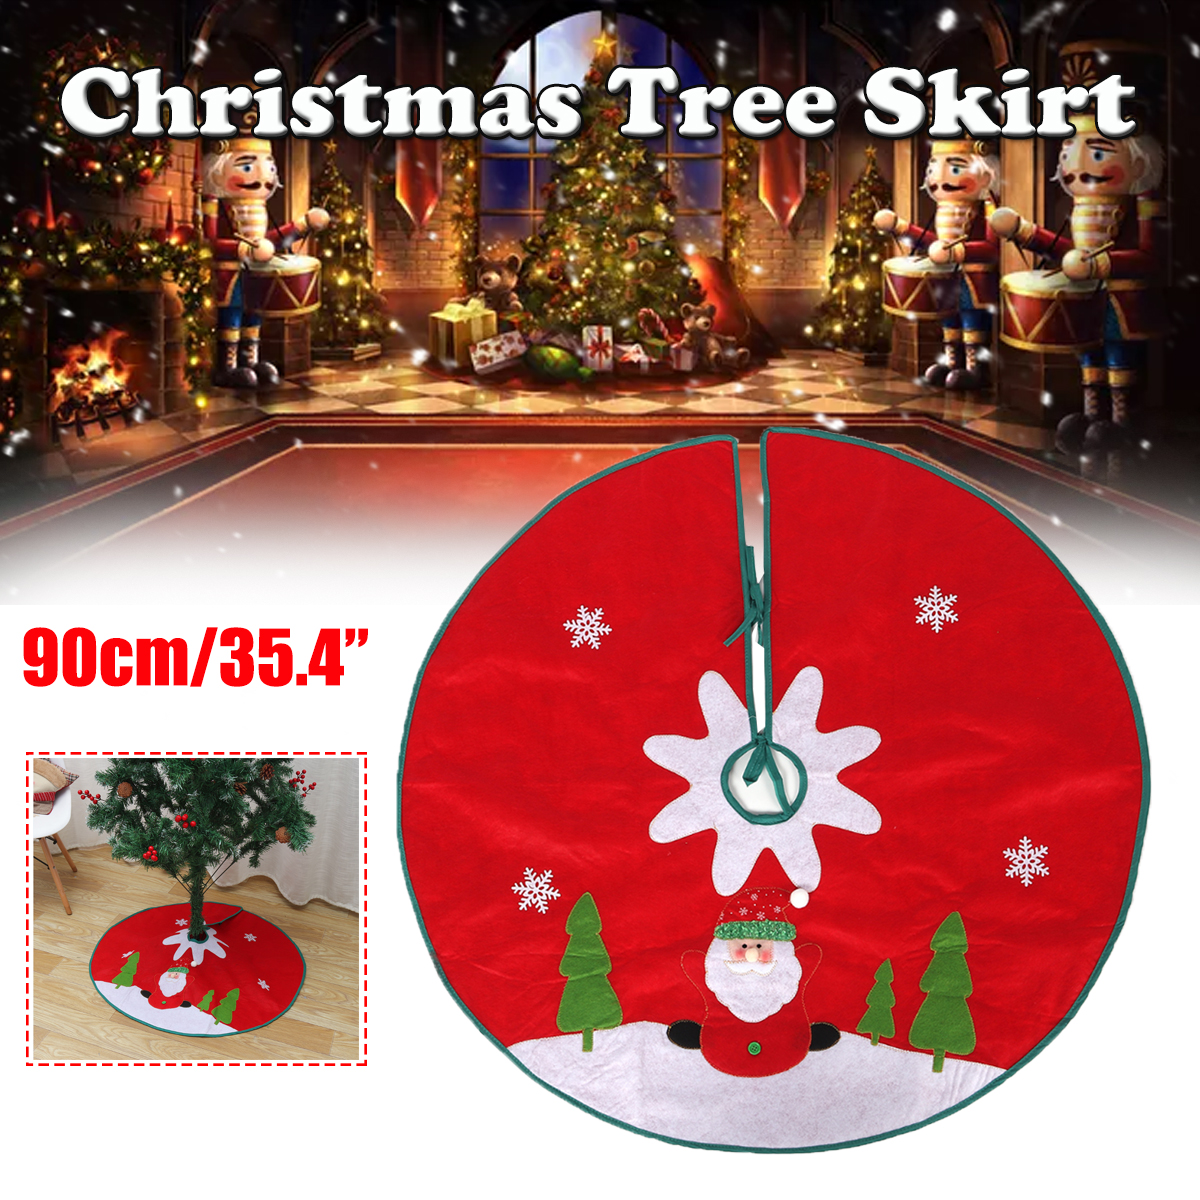 2020-Christmas-Decor-Santa-Claus-Christmas-Tree-Skirt-Aprons-New-Year-Xmas-Tree-Carpet-Foot-Cover-fo-1770951-1